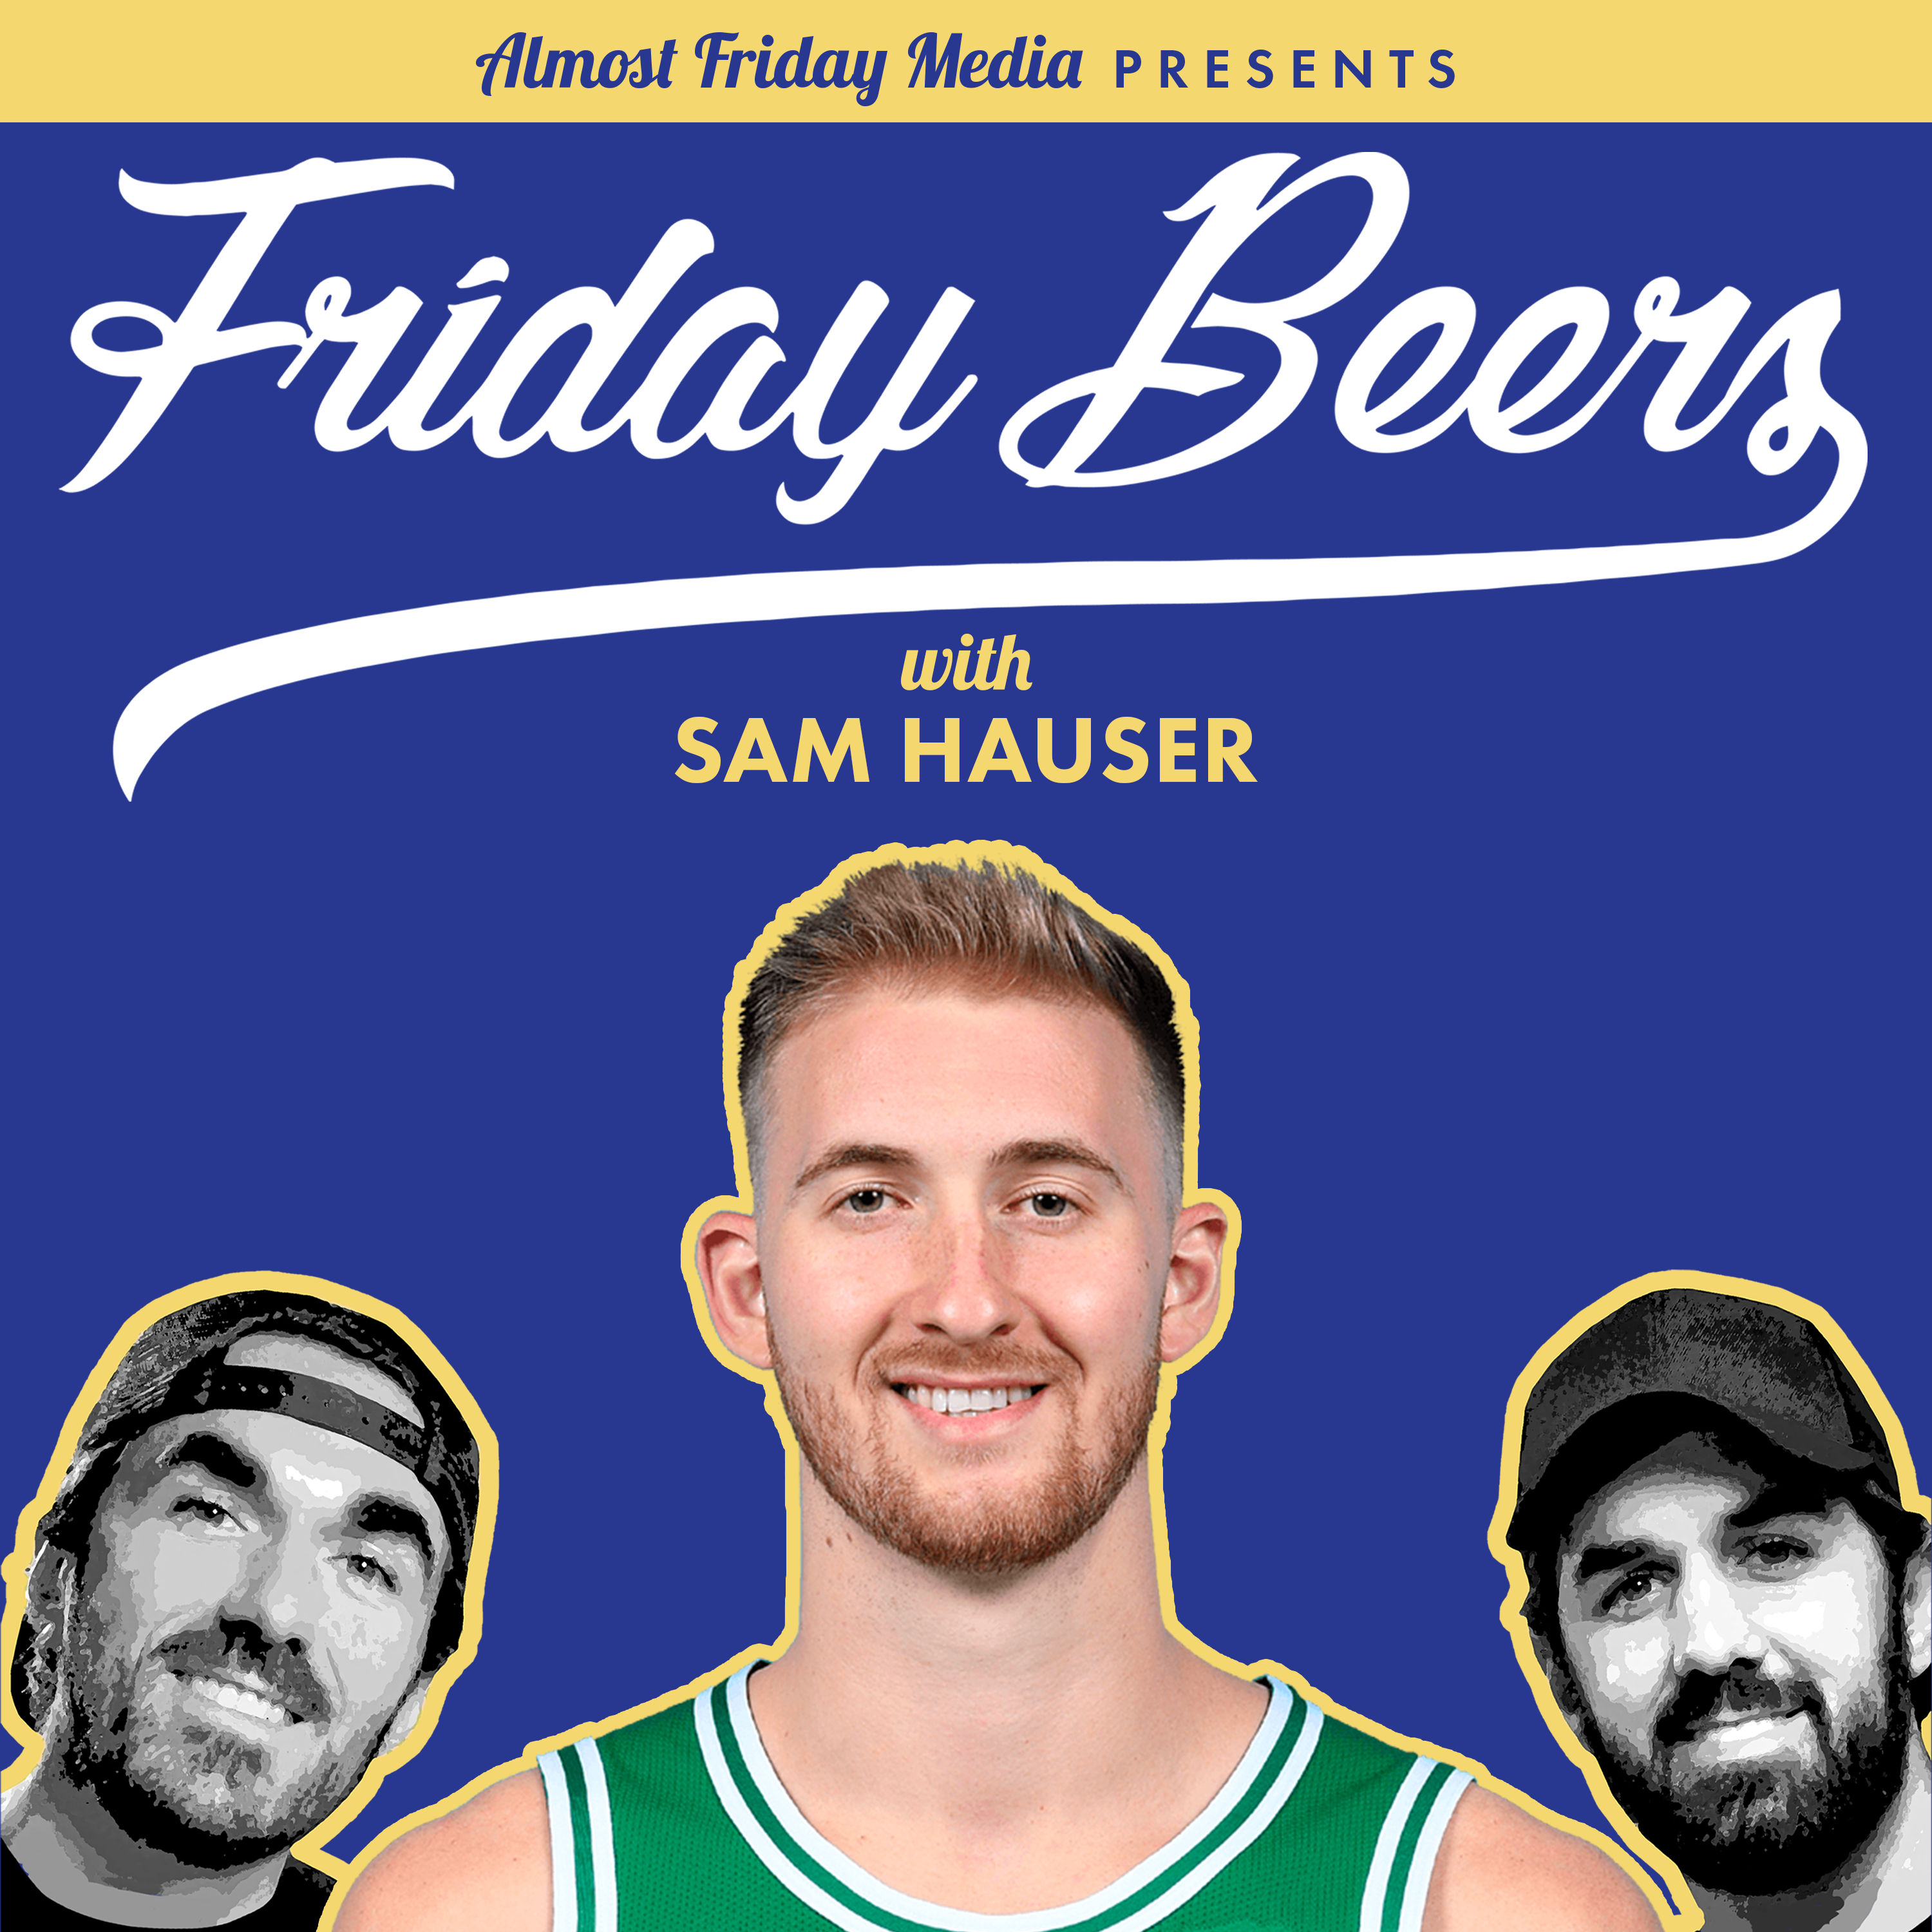 Sam Hauser: Celtics Talk, Friday Beers and the NBA, High School Mixtapes